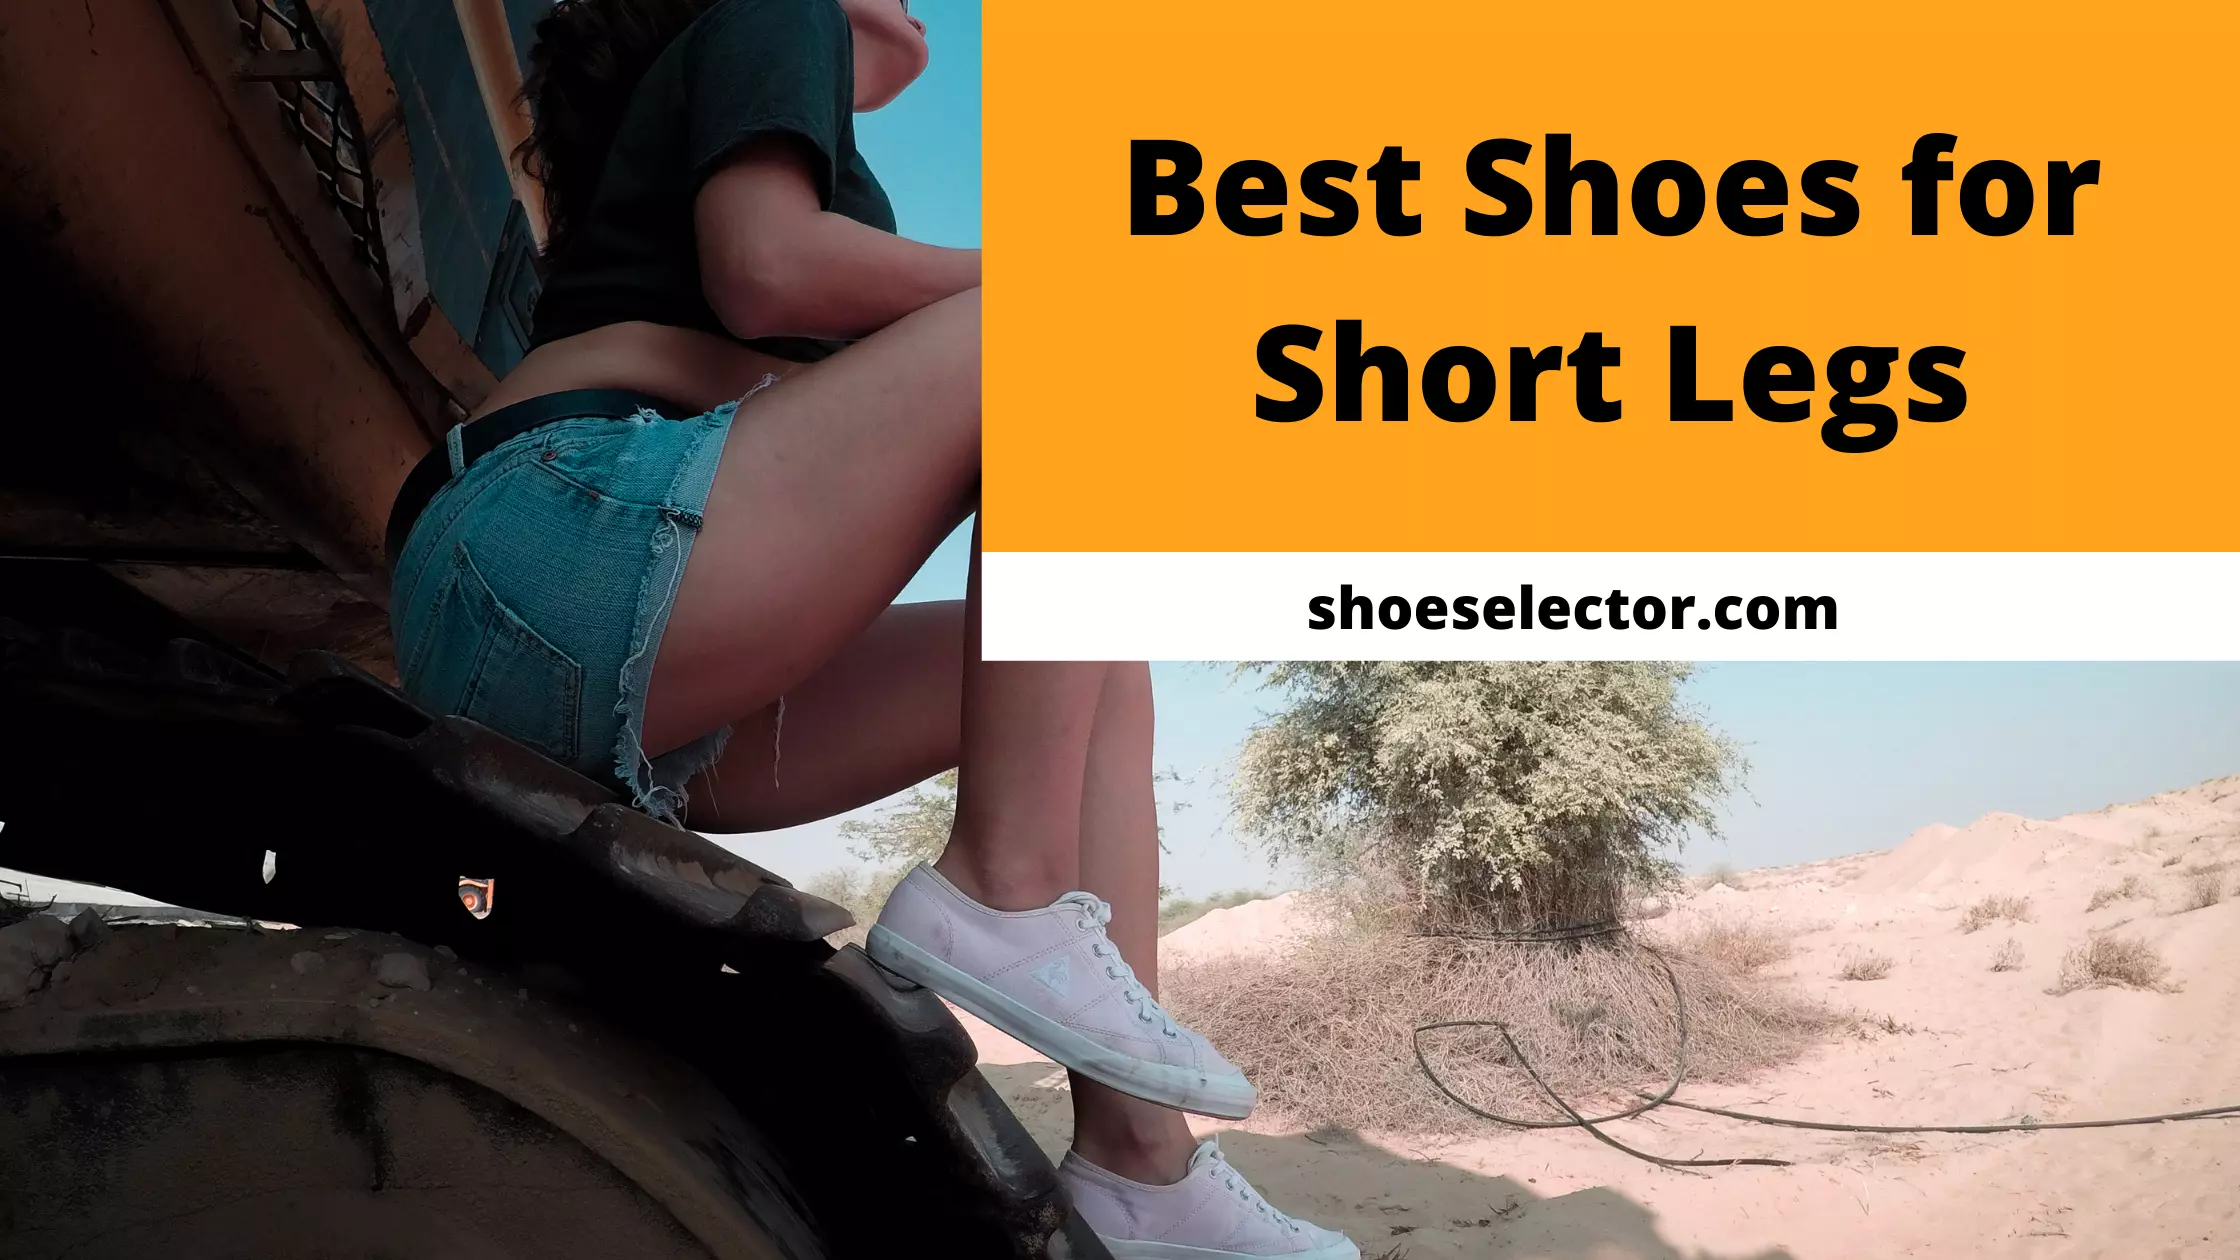 Best Shoes for Short Legs - Expert Reviews